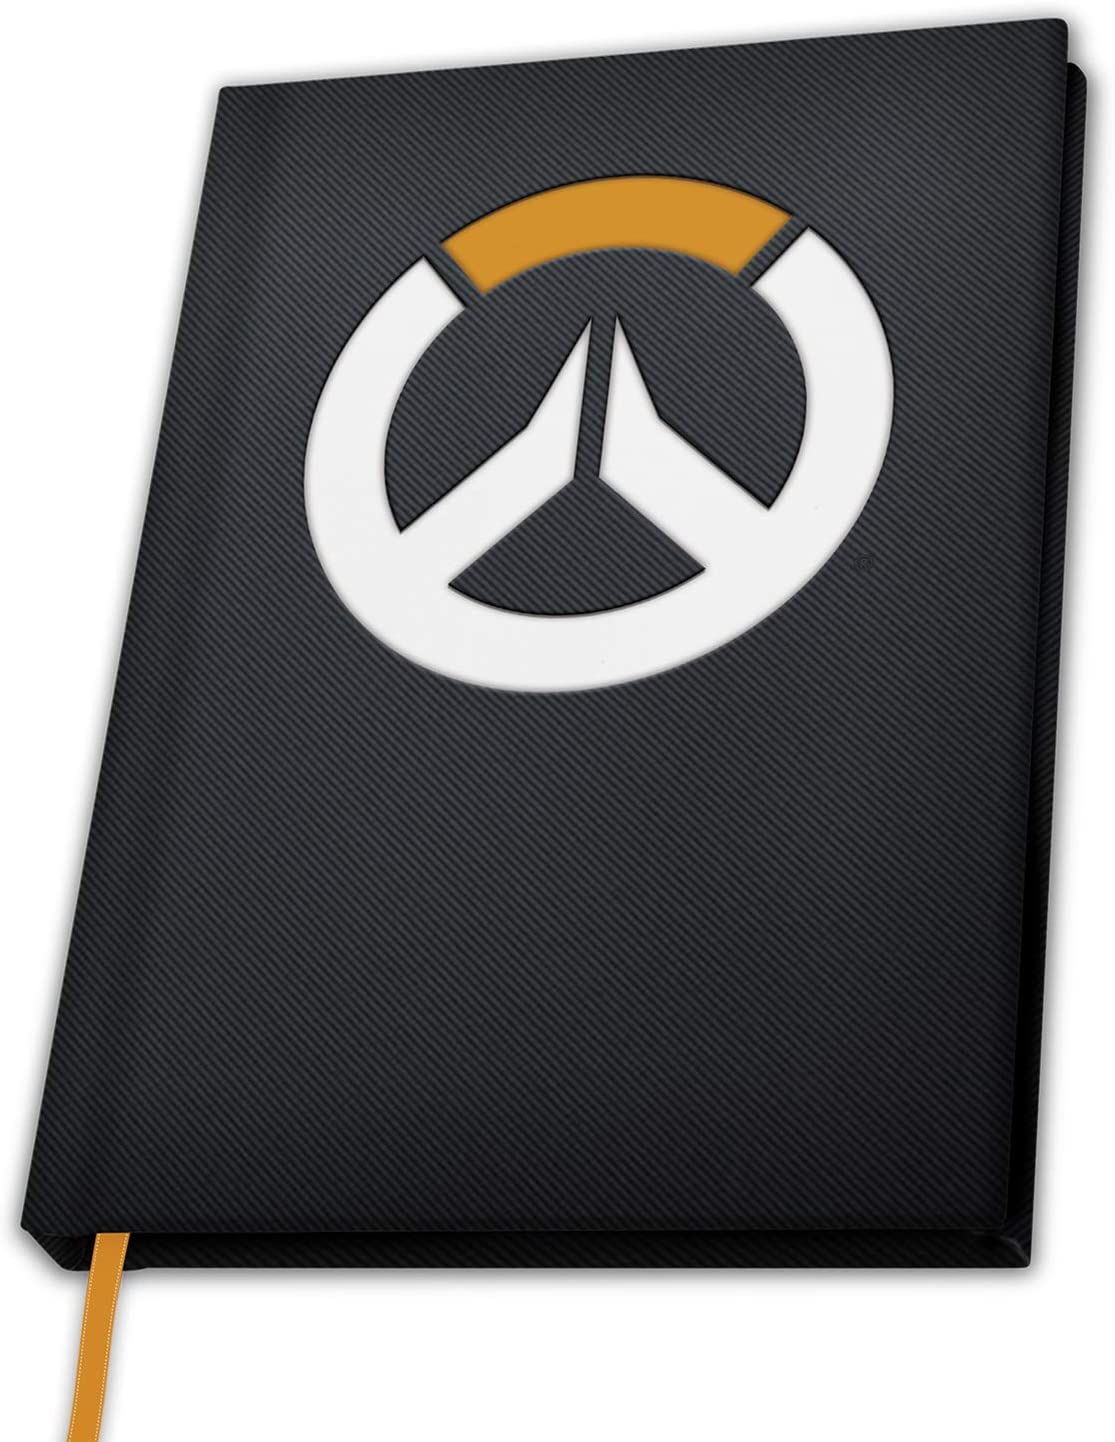 Overwatch - Cahier A5 - Logo